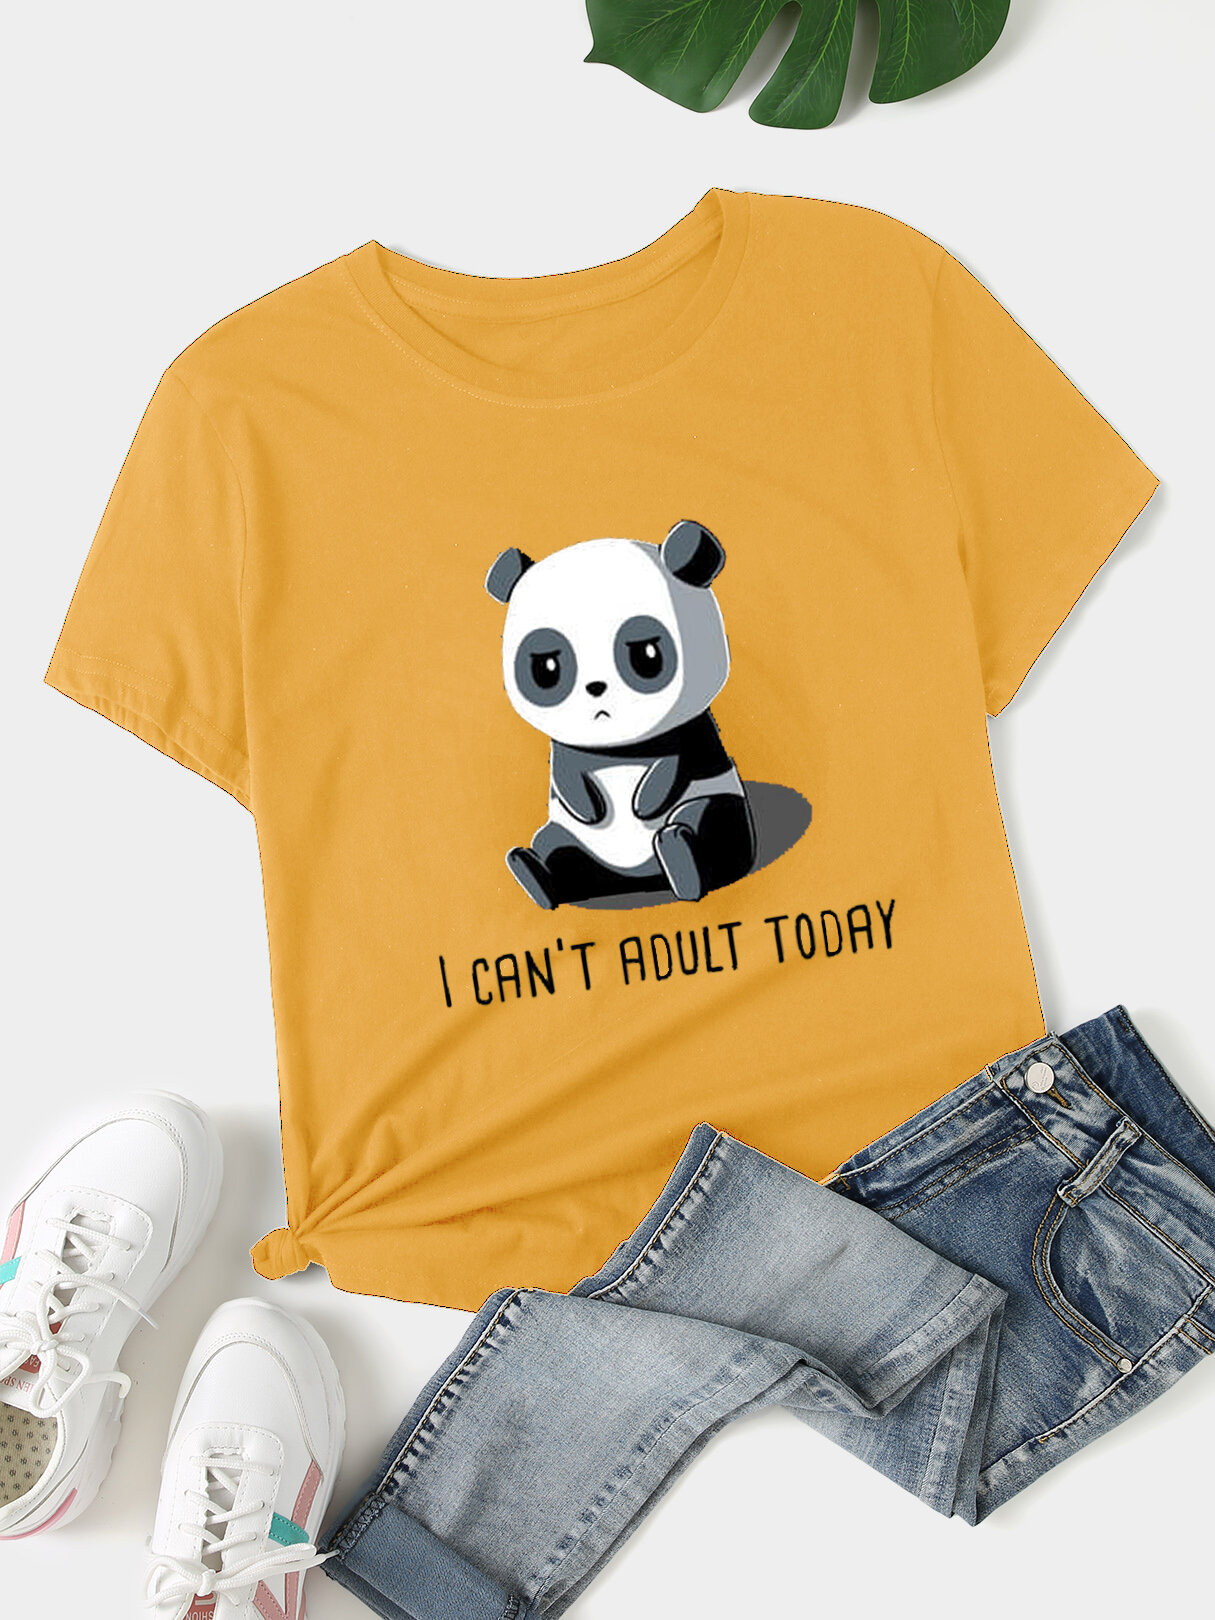 Camiseta gola careca plus size Panda manga curta